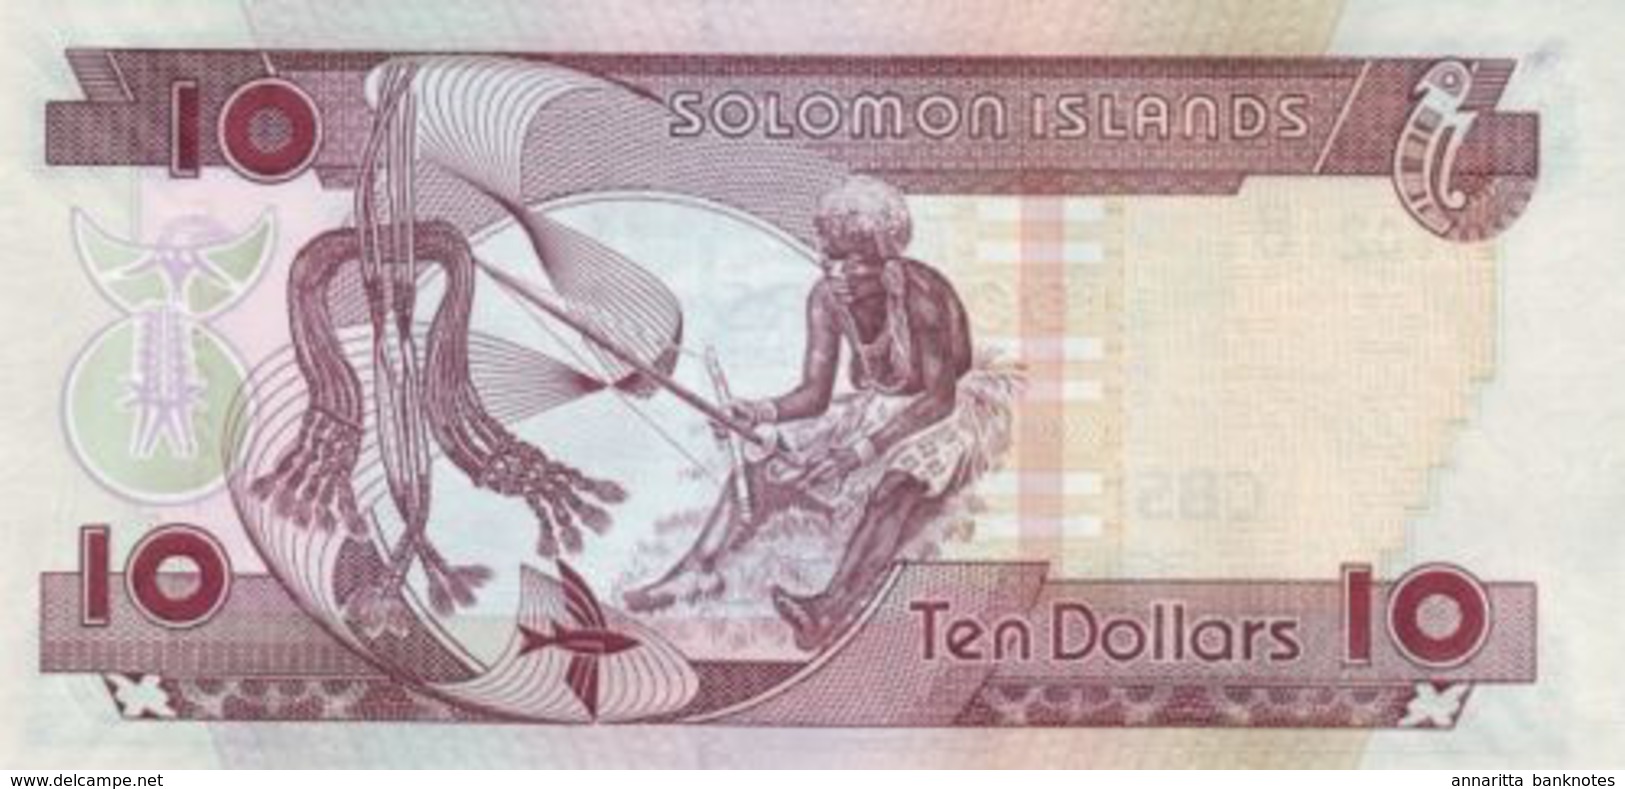 Solomon Islands 10 Dollars ND (2009), UNC, P-27a, SB217a - Isola Salomon